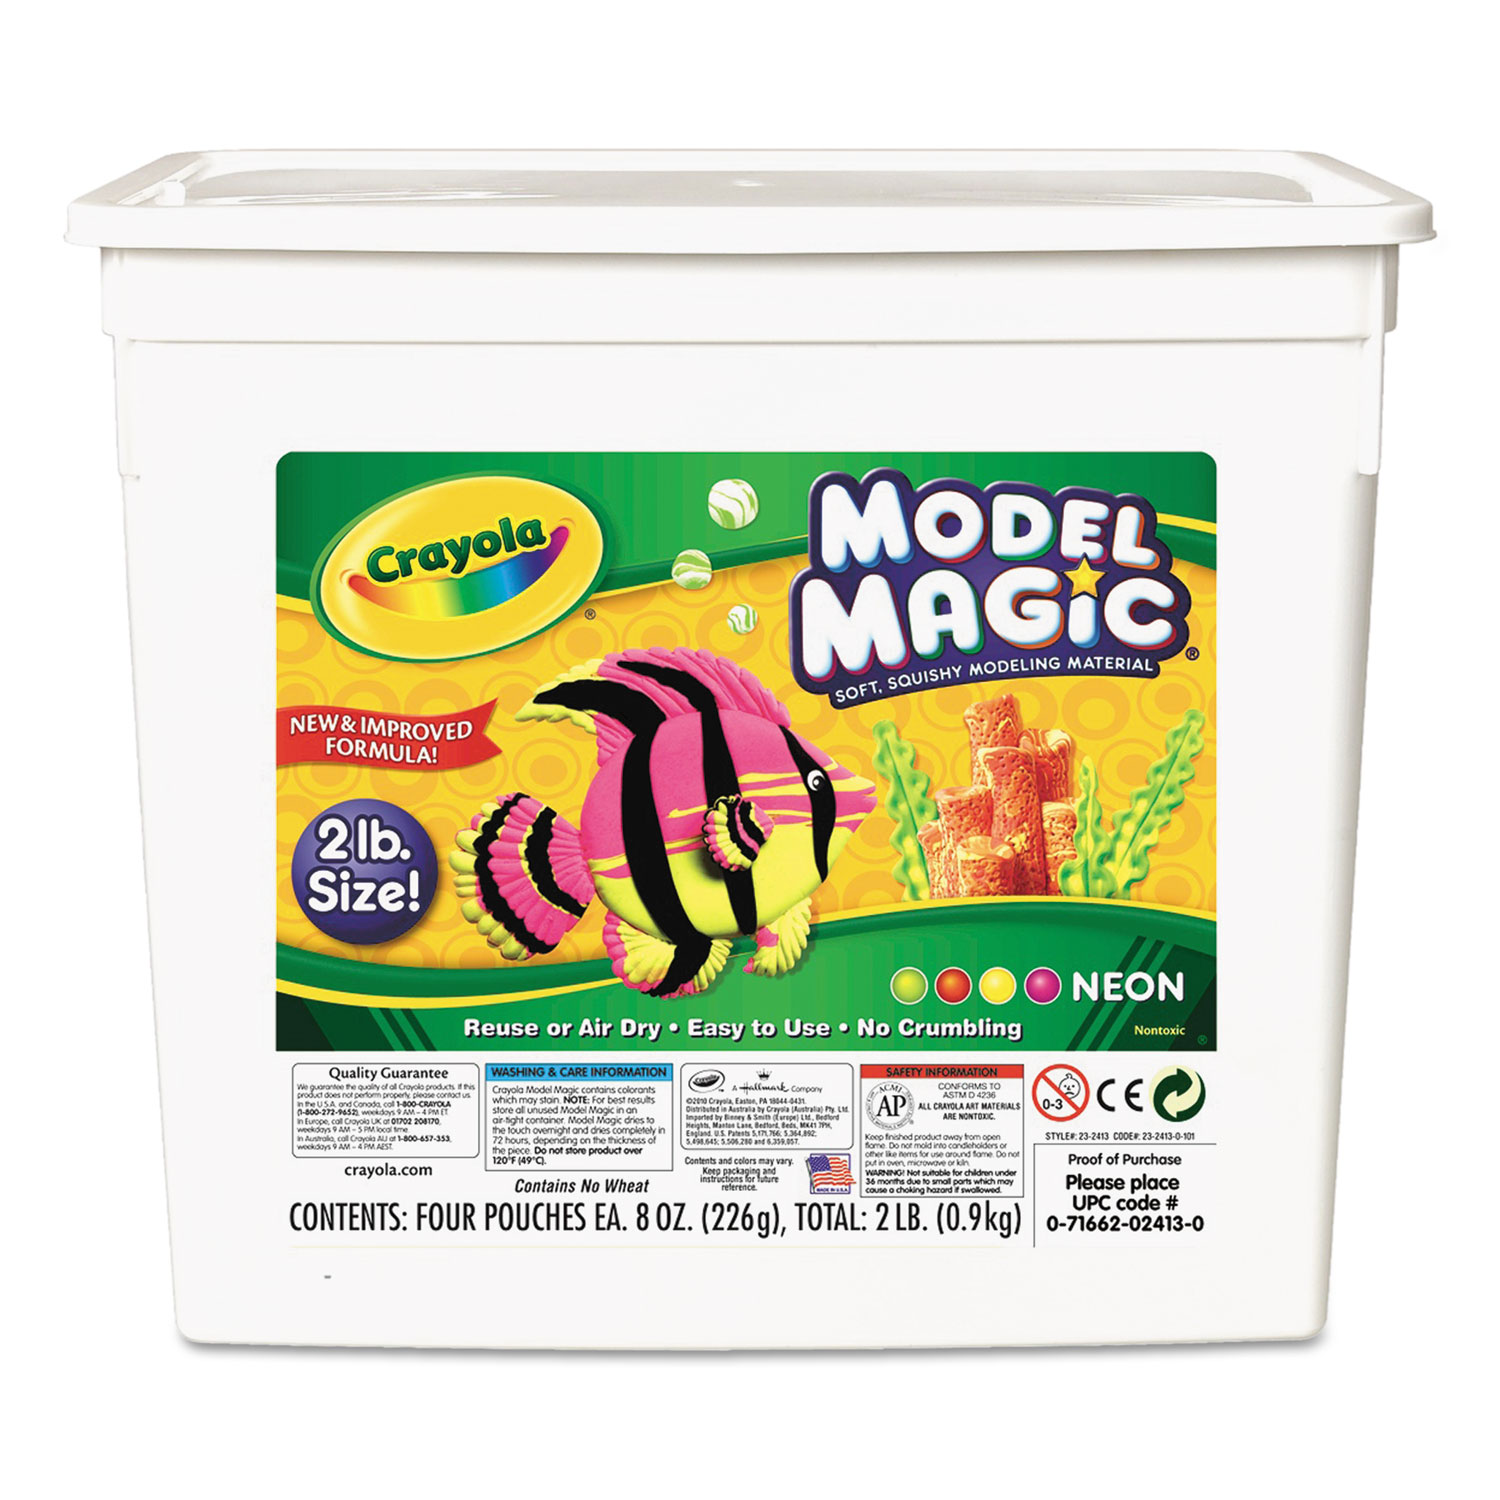  Crayola BIN232413 Model Magic Modeling Compound, 8 oz each/Neon, 2 lbs. (CYO232413) 